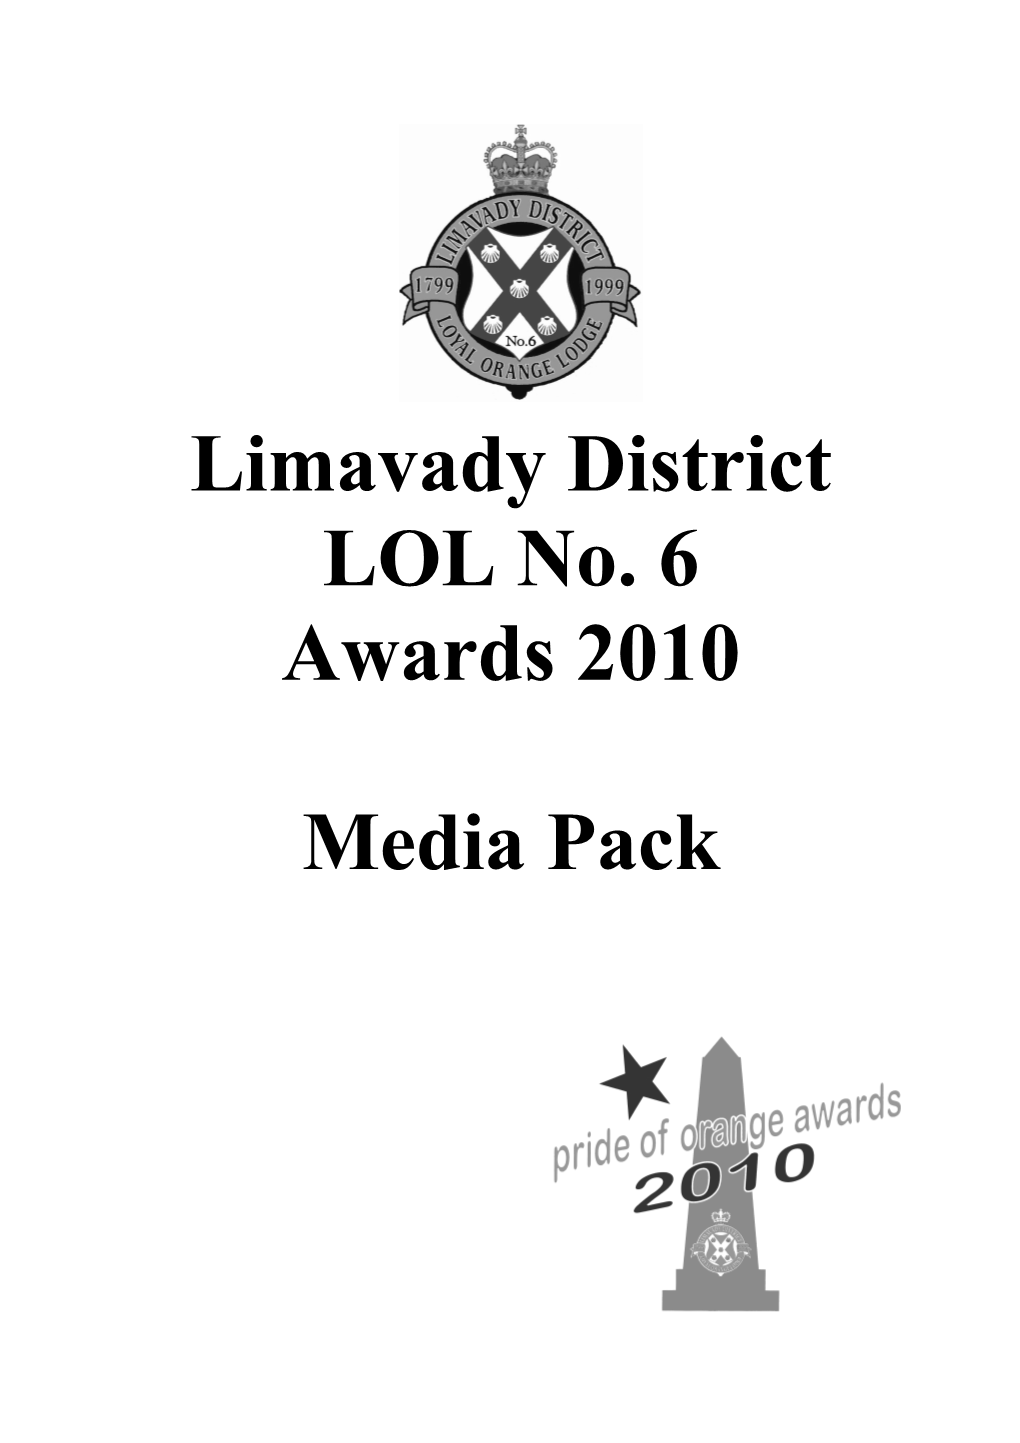 Limavady District LOL No.6 Annual Awards